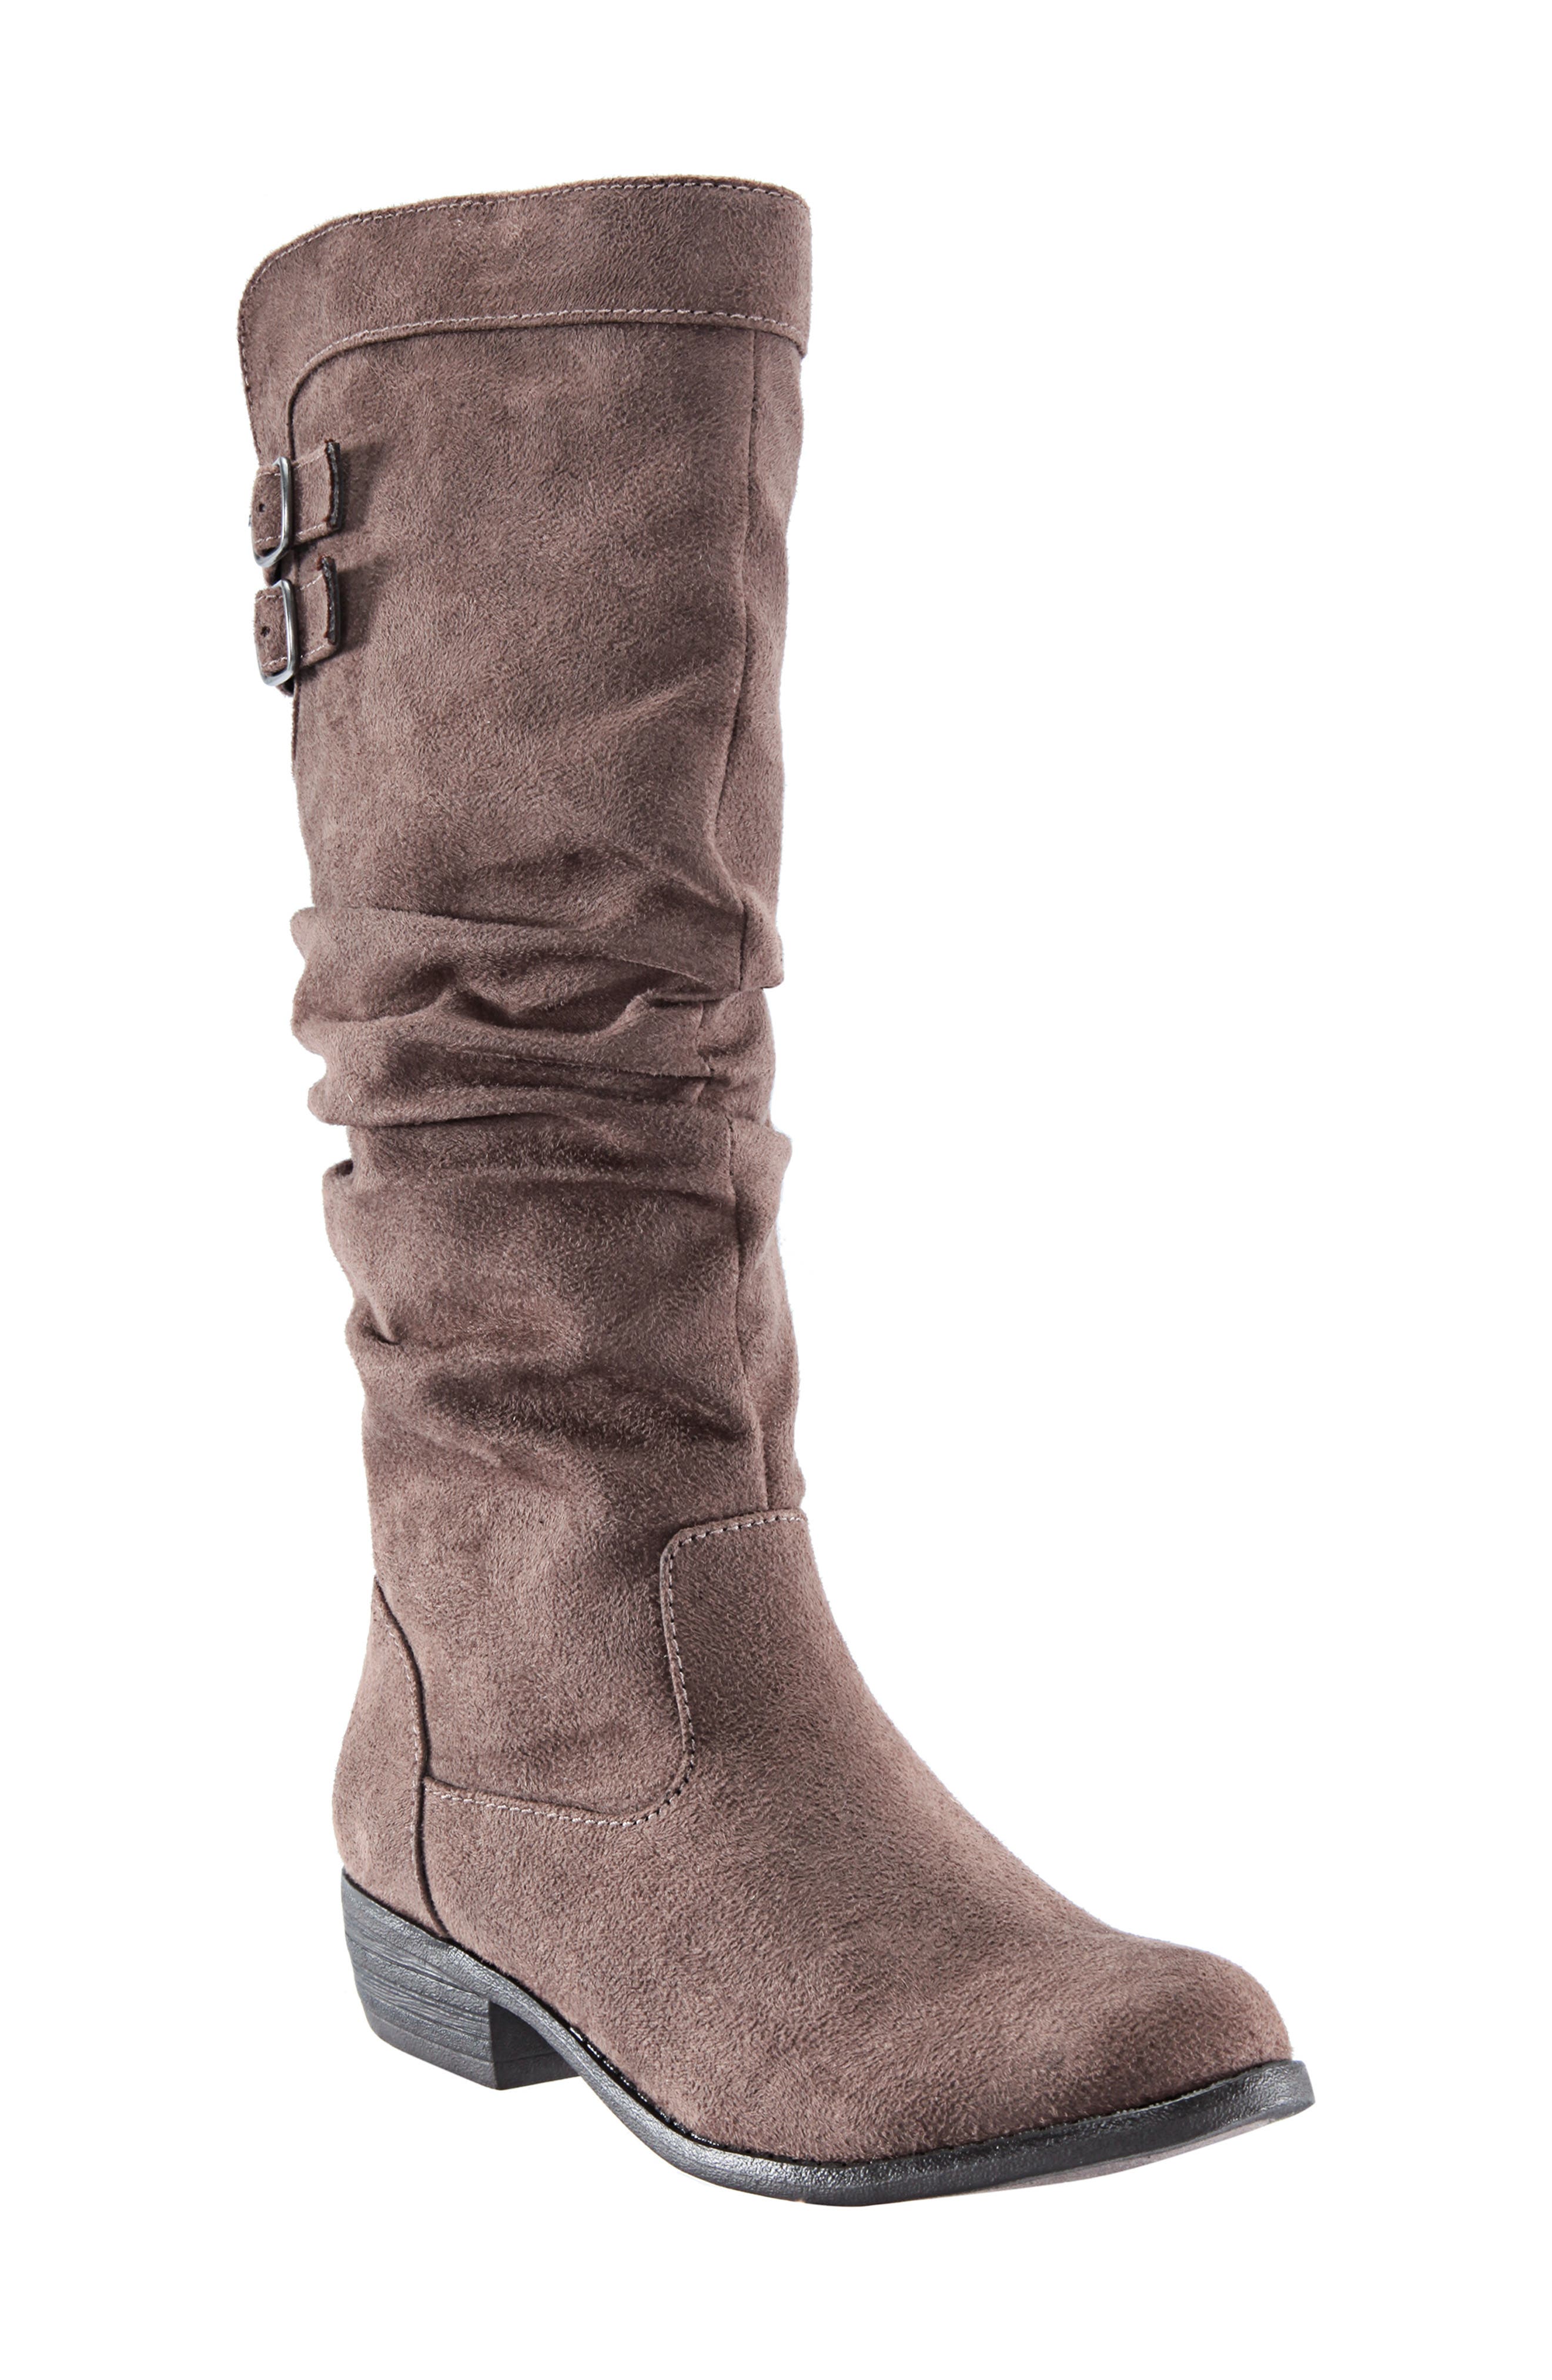 UPC 794378361619 product image for Girl's Nina Gilda Tall Slouchy Boot, Size 5 M - Beige | upcitemdb.com